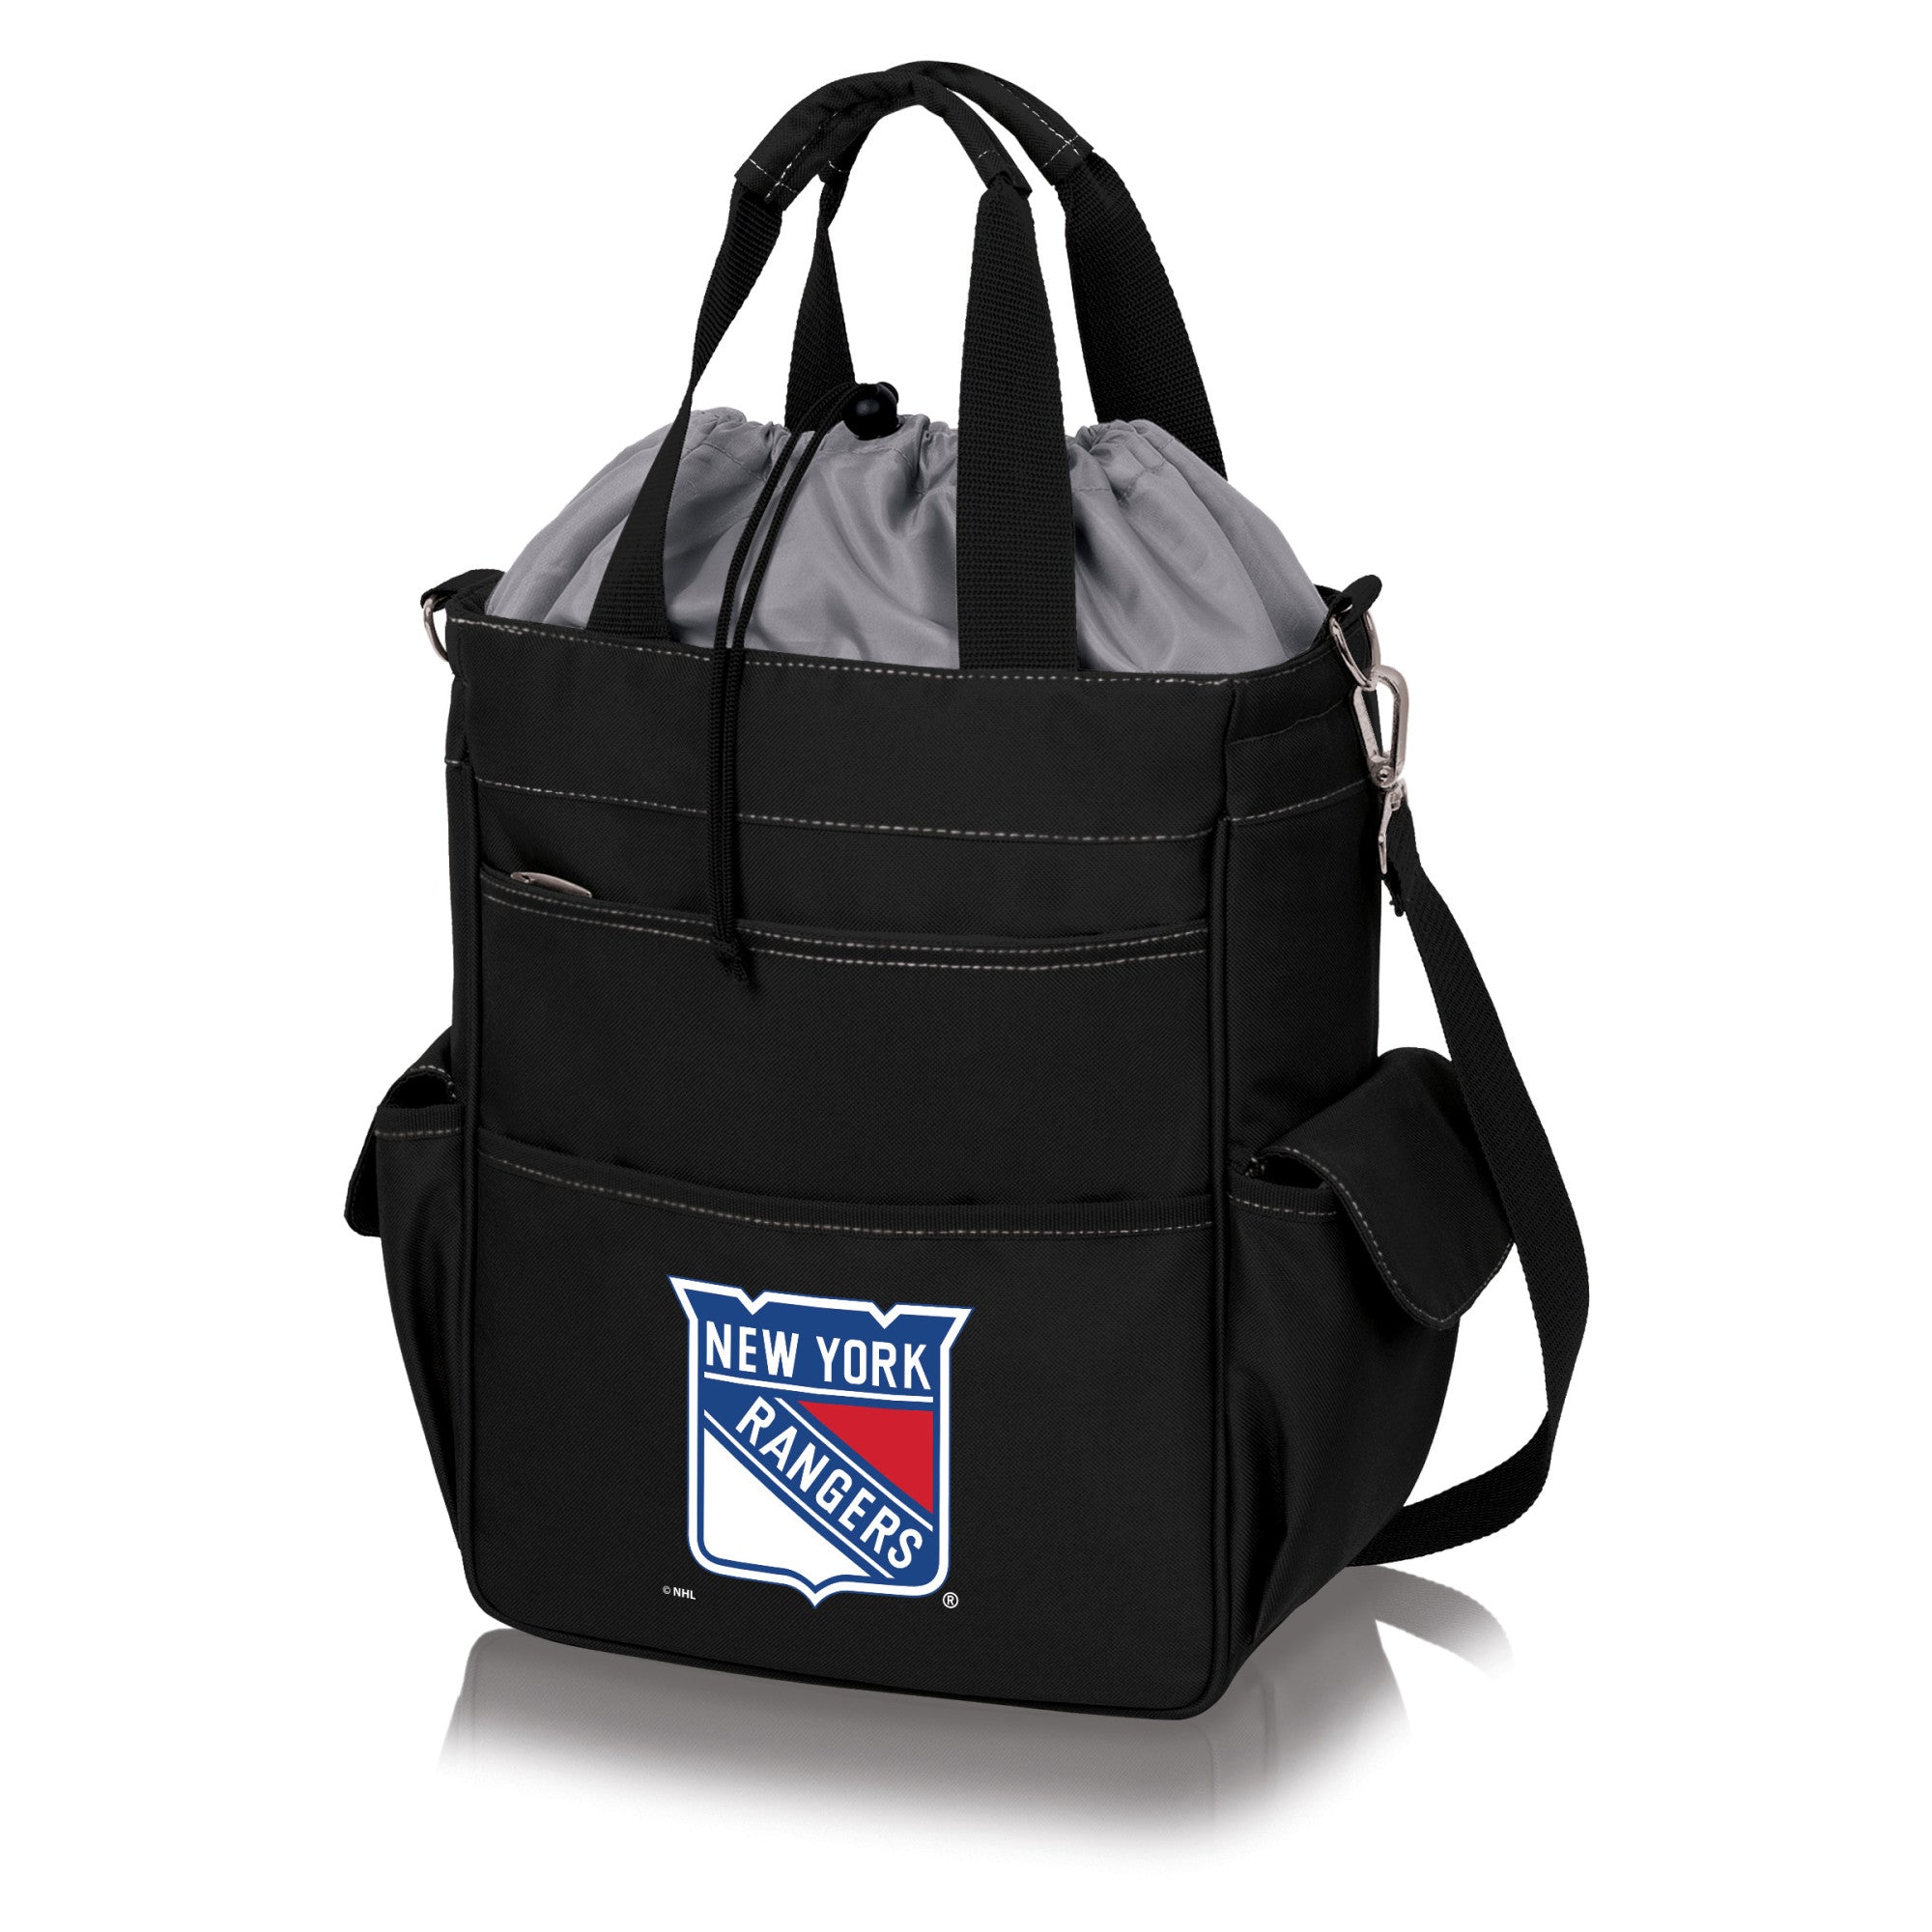 New York Rangers - Activo Cooler Tote Bag